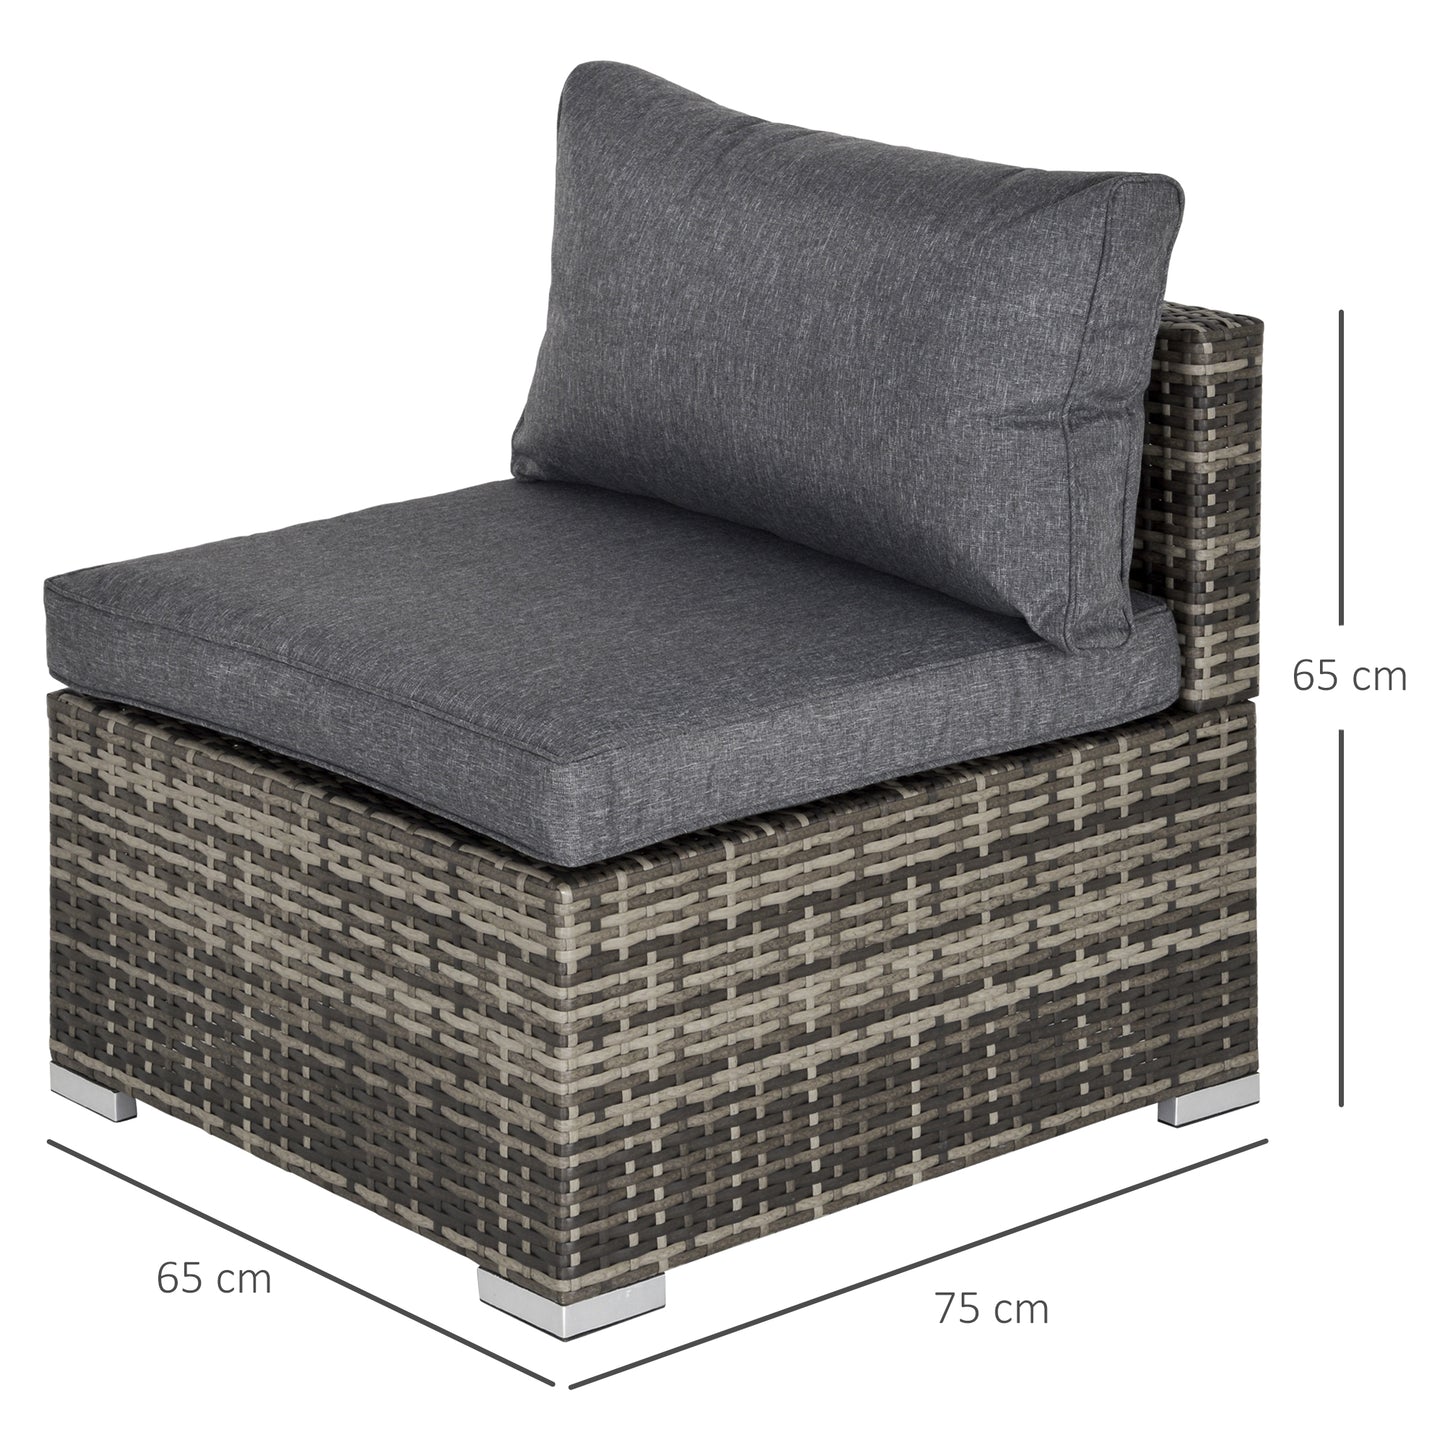 Outsunny Outdoor Garden Furniture Rattan Single Sofa with Cushions for Backyard Porch Garden Poolside Deep Grey w/